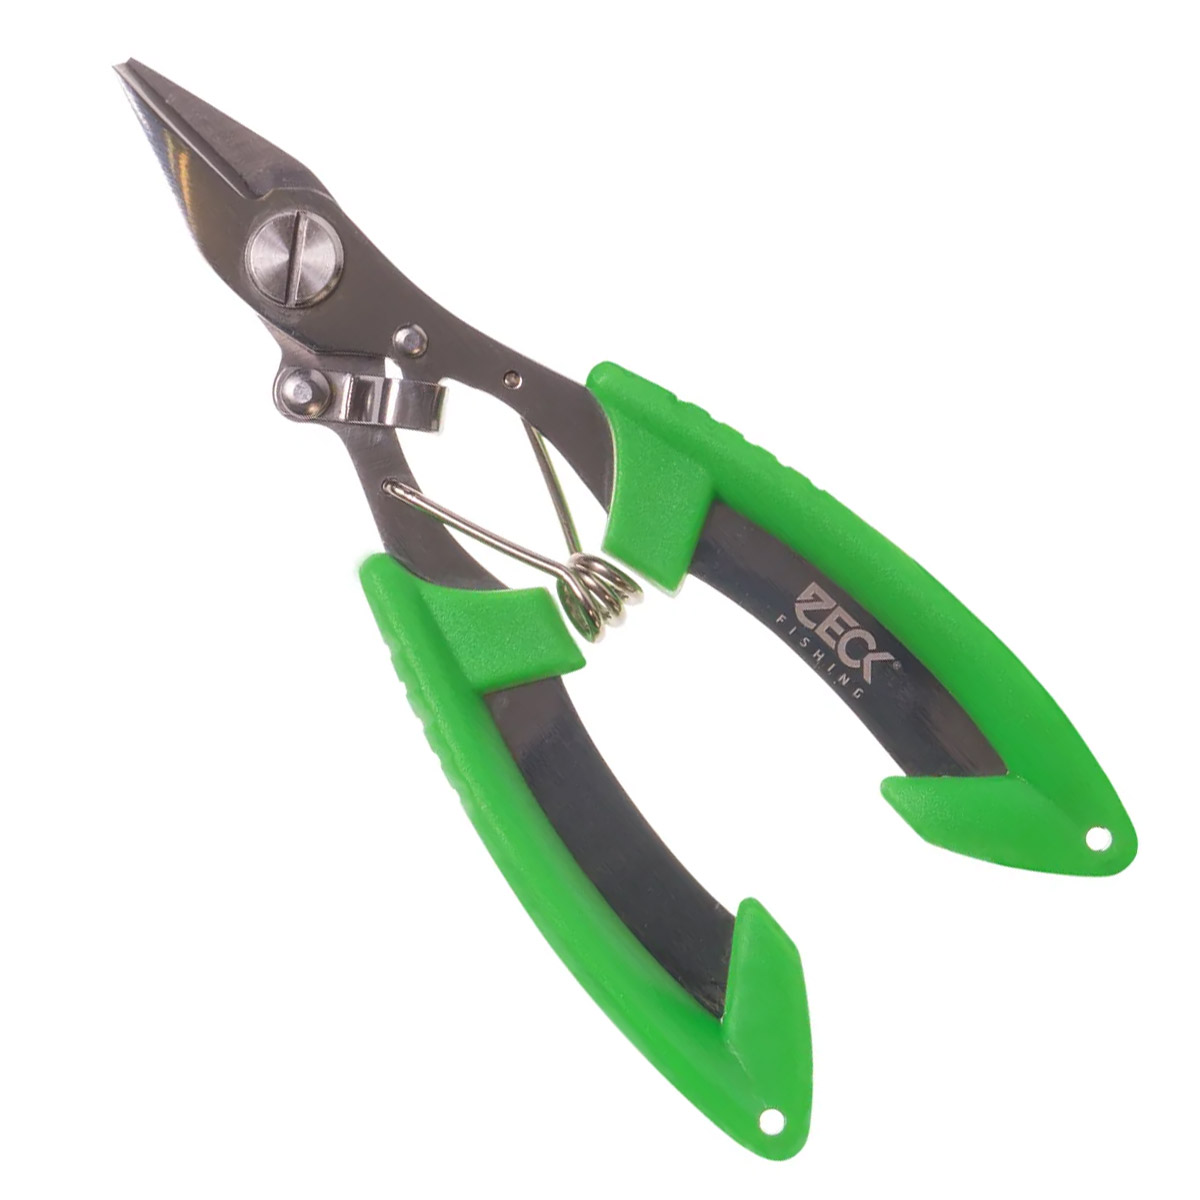 Zeck Braid Scissors Green